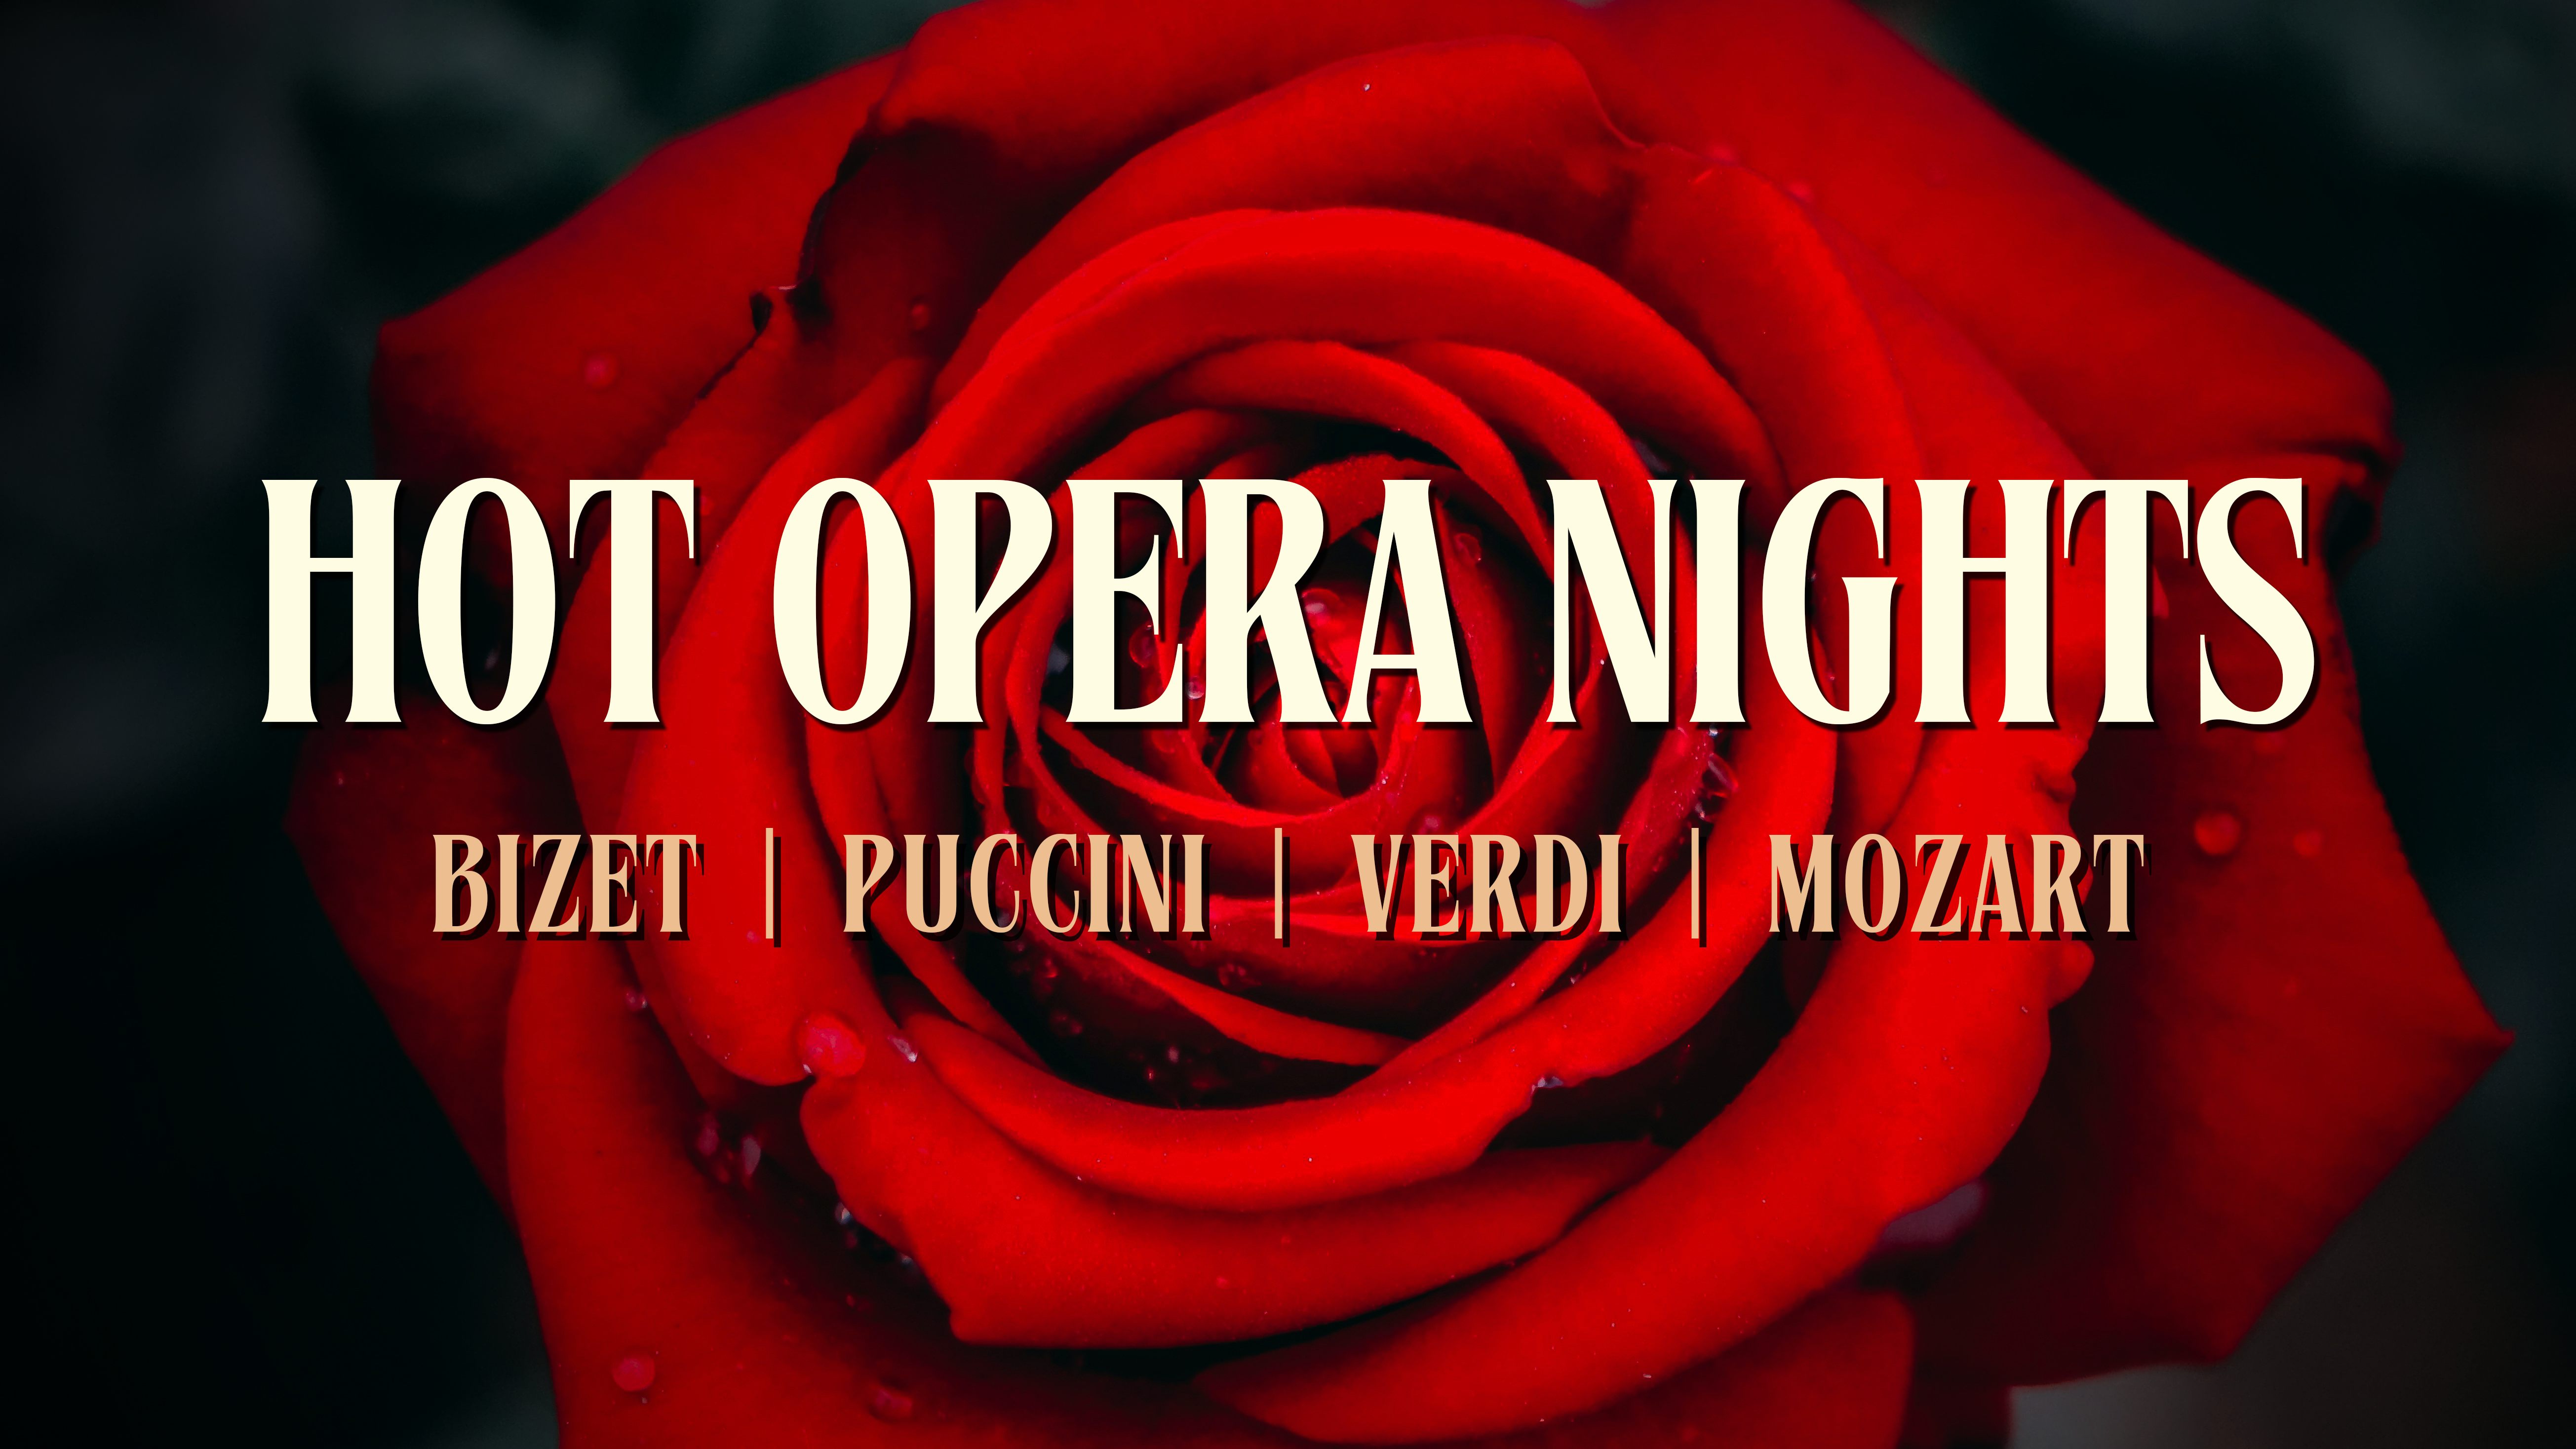 Hot Opera Nights - Bizet, Puccini, Verdi & Mozart